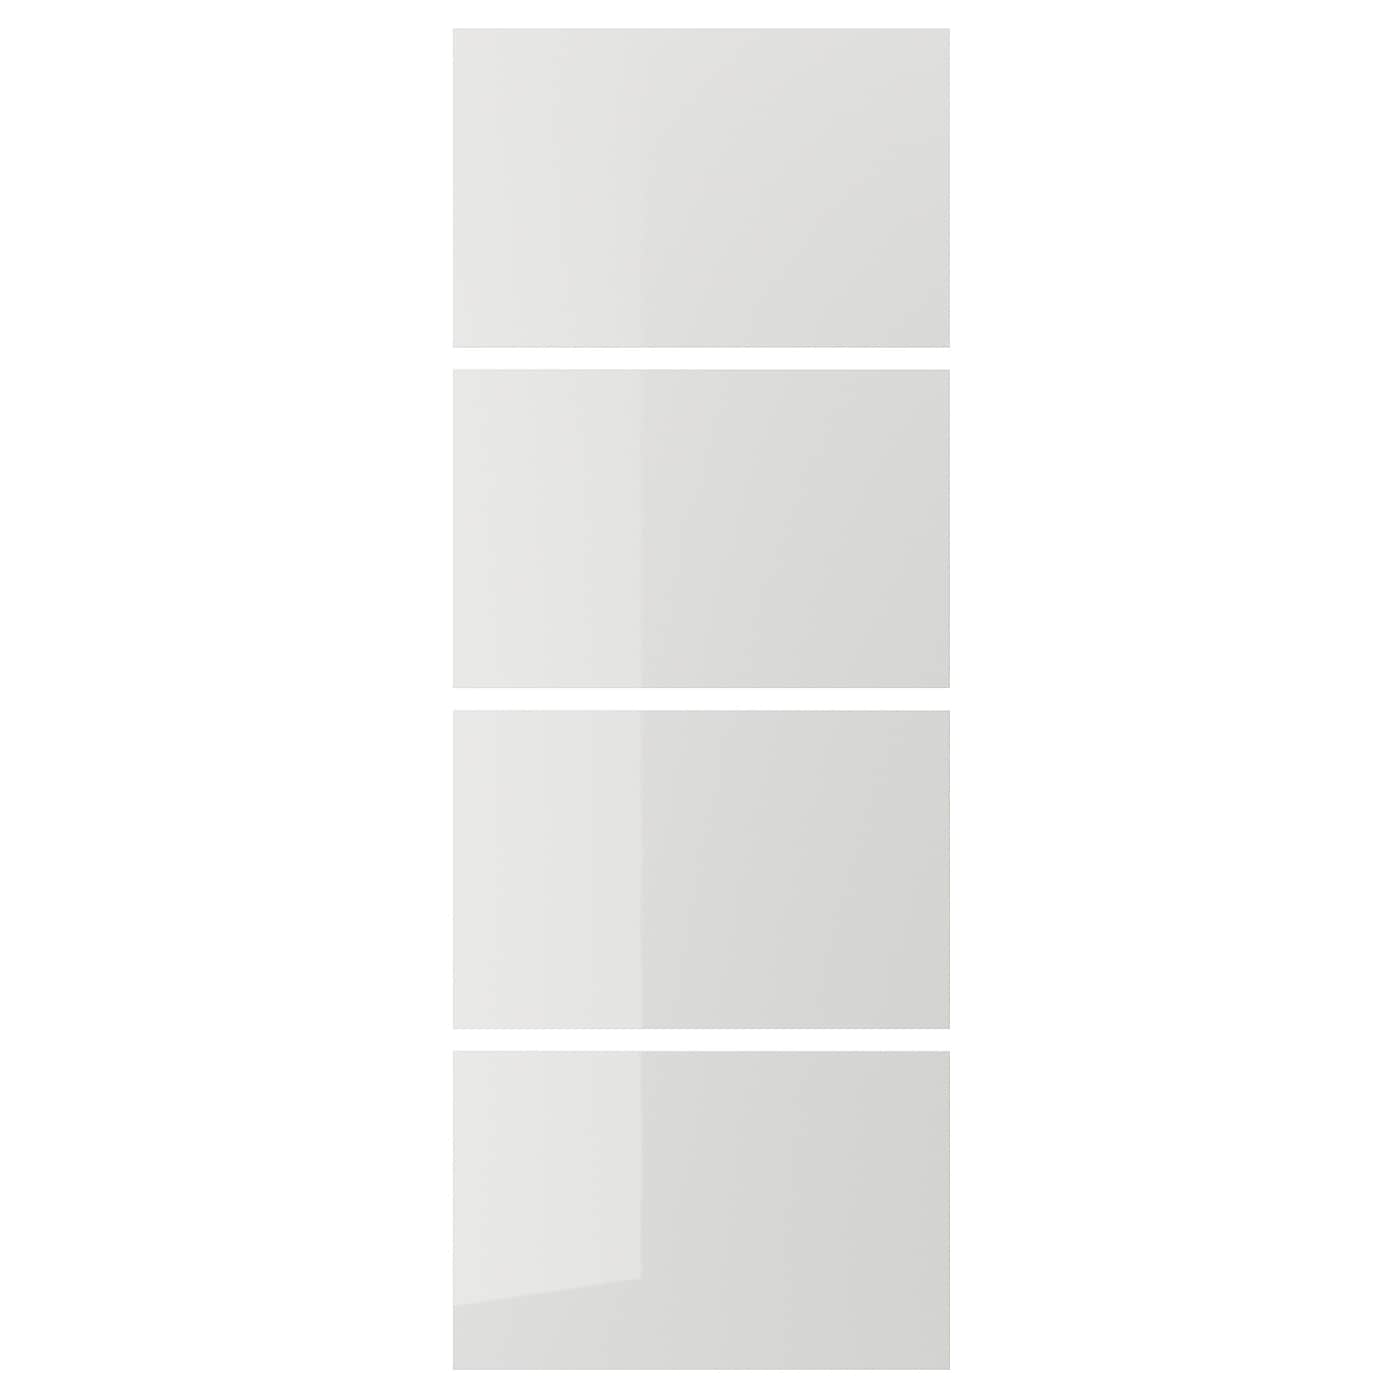 5 панели для коробки раздвижной двери - HOKKSUND IKEA/ ХОККСУНД ИКЕА,  201х75 см, серый